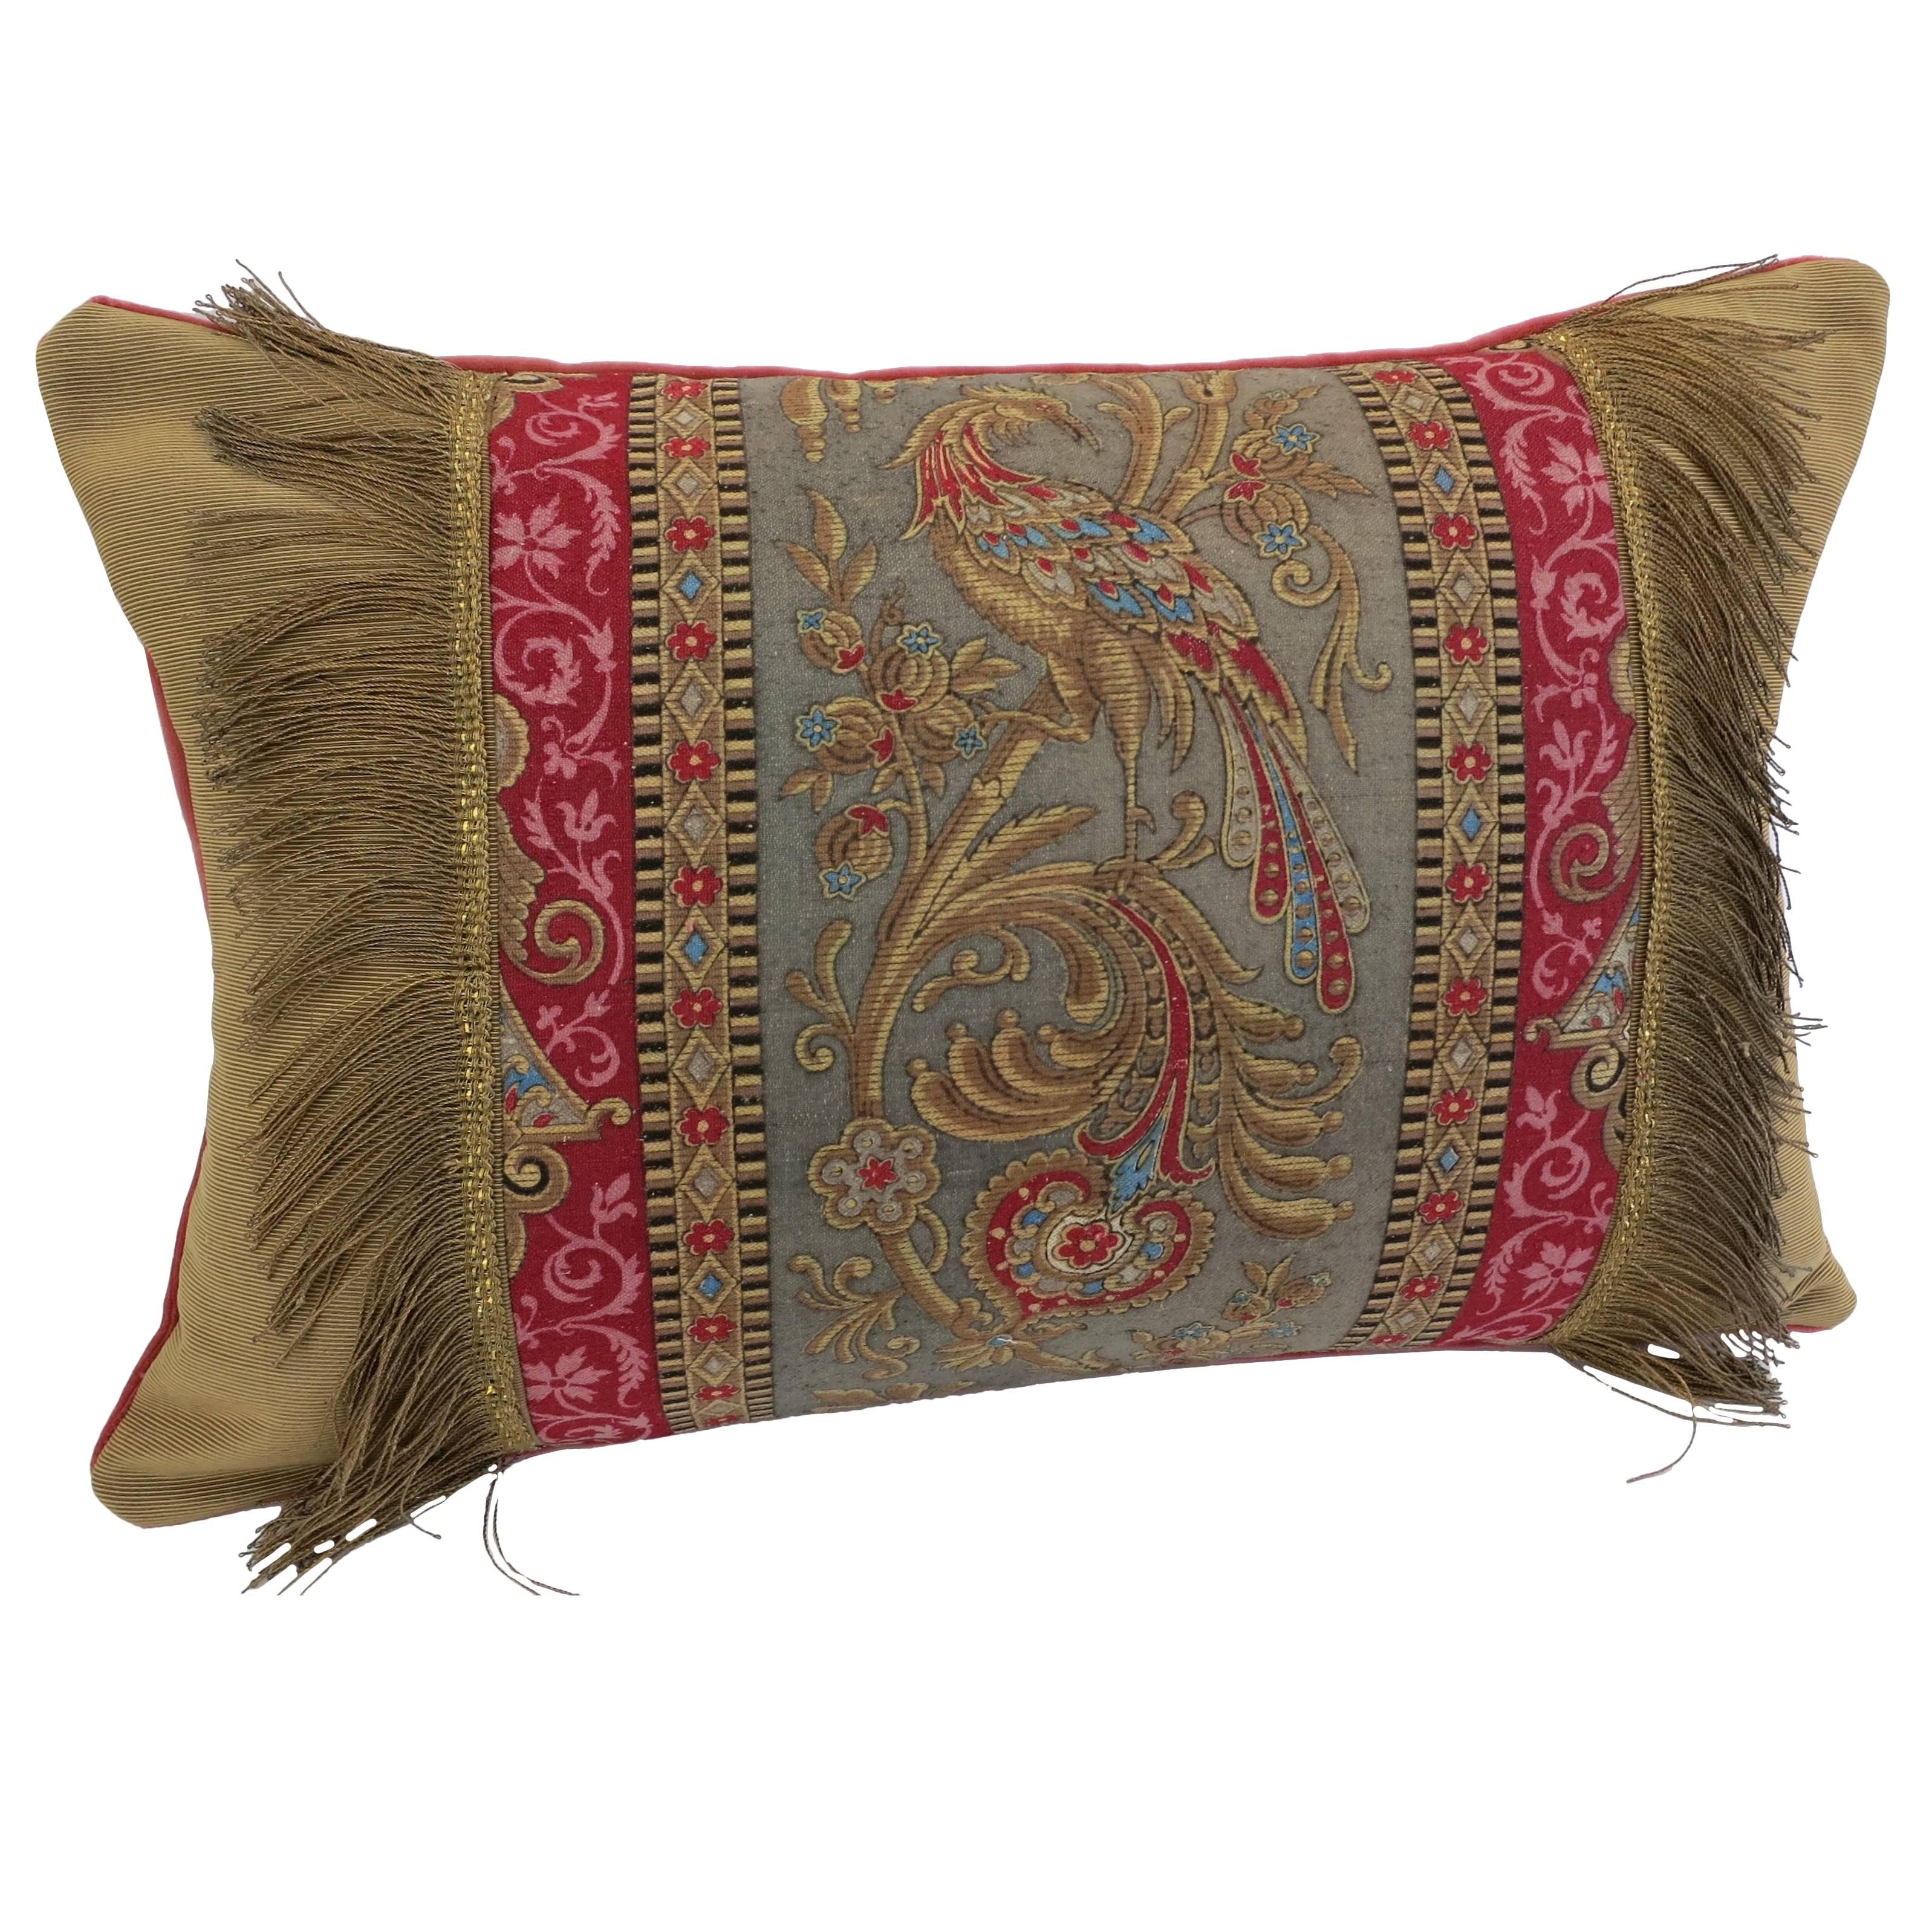 19th Century French Silk Textile Pillow with Metallic Fringe